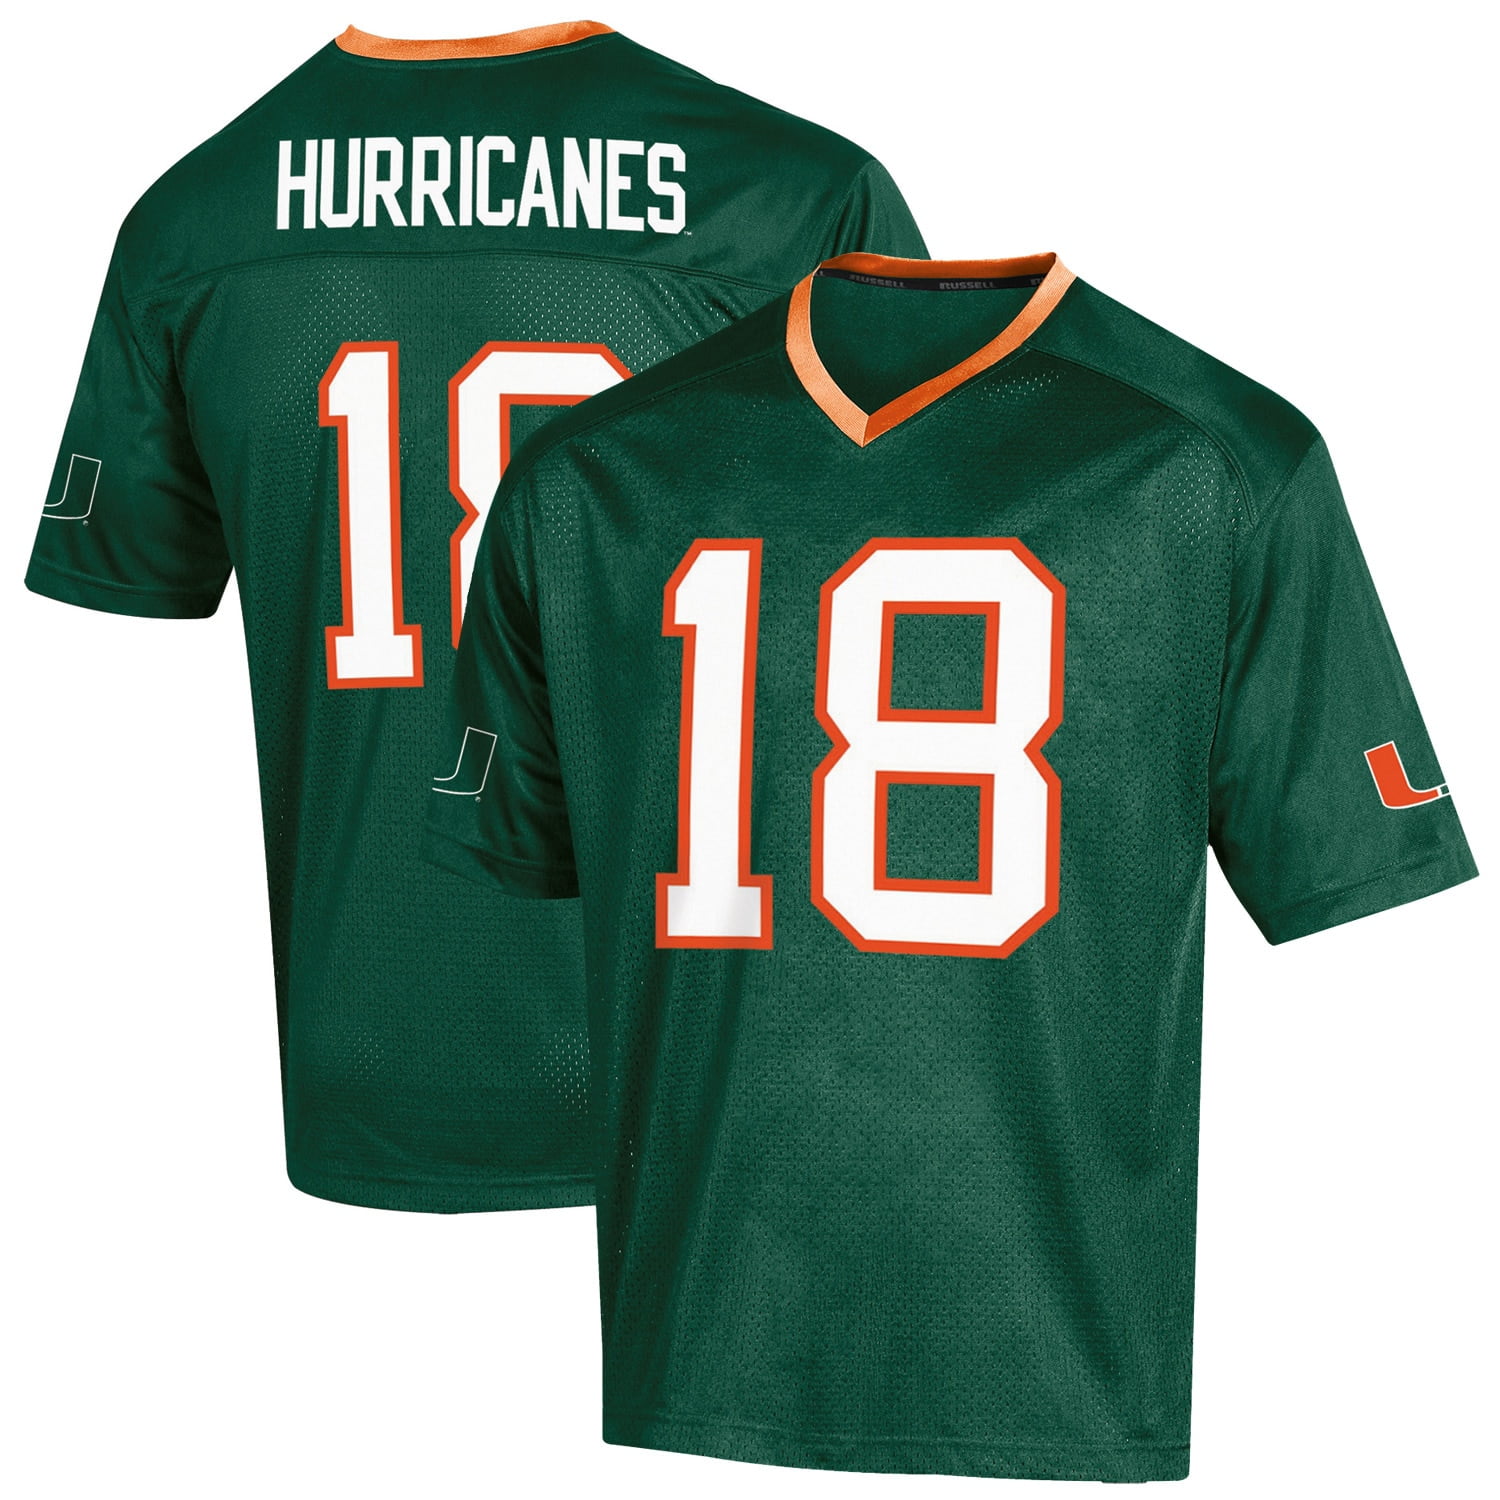 miami hurricanes youth football jersey